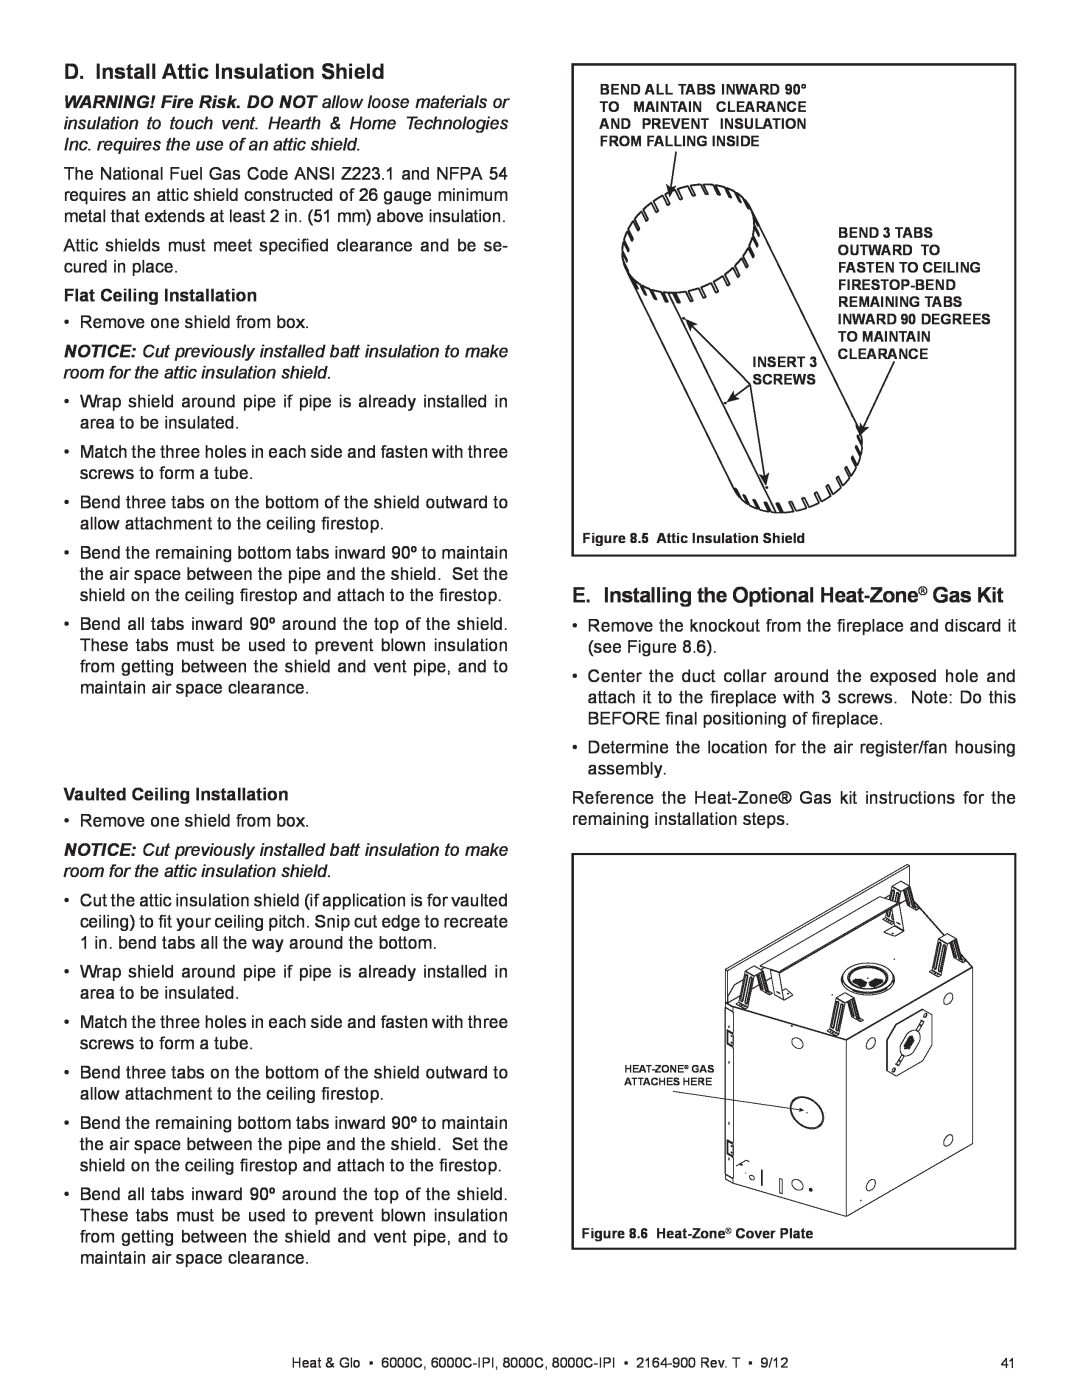 Heat & Glo LifeStyle 6000C manual D. Install Attic Insulation Shield, E. Installing the Optional Heat-Zone Gas Kit 